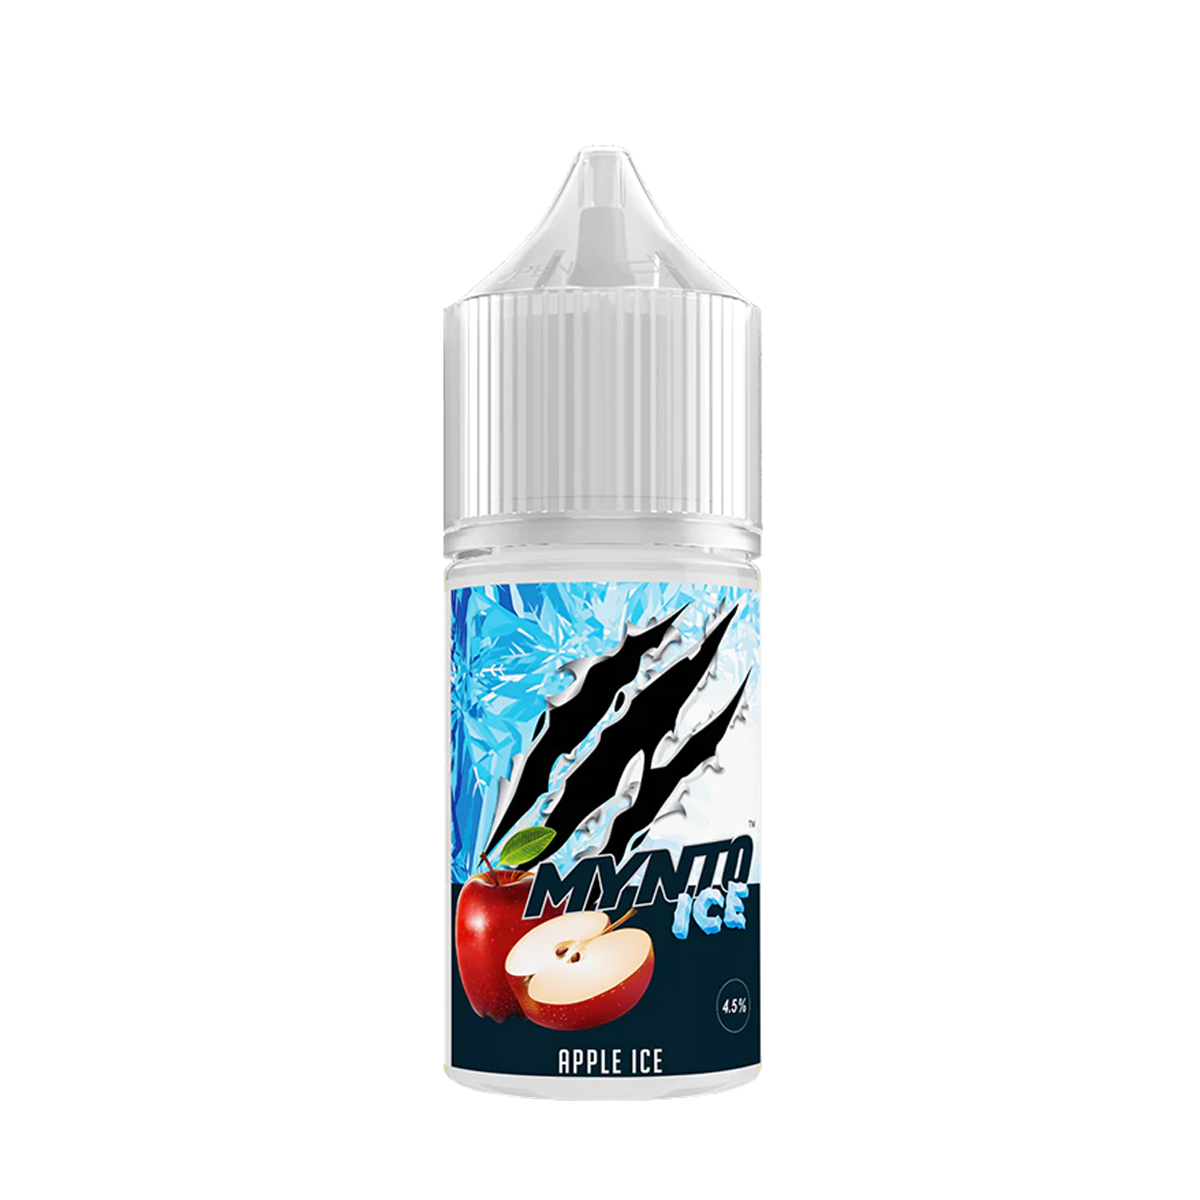 Suorin Mynto Ice Salt Nicotine Vape Juice 45 Mg 30 Ml Apple Ice